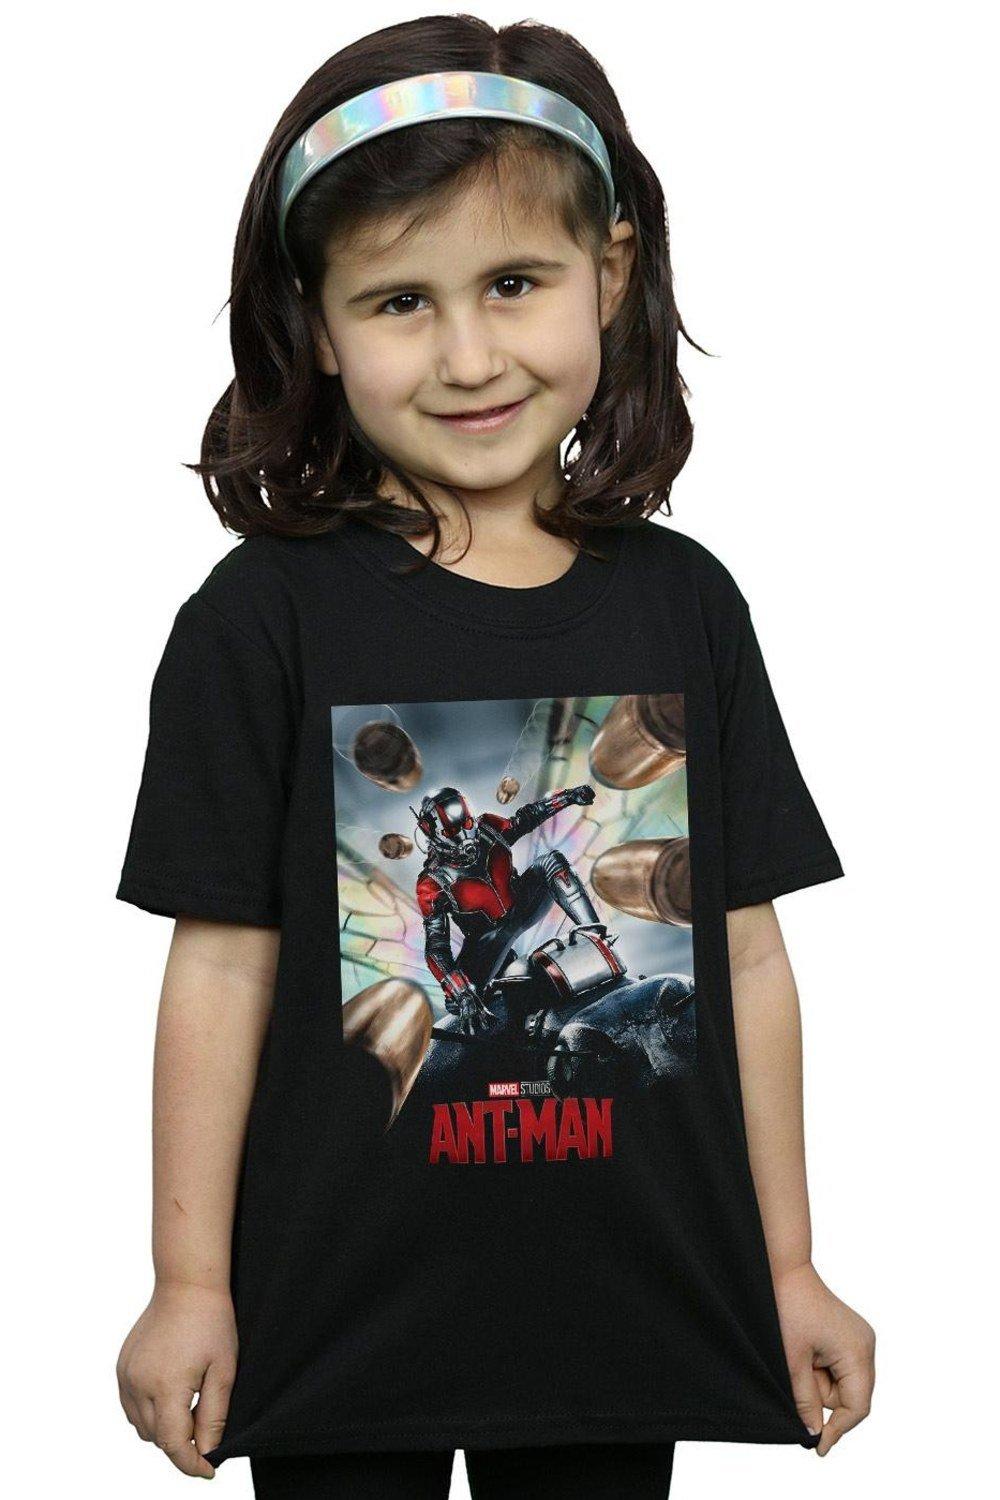 Ant-Man Poster Cotton T-Shirt